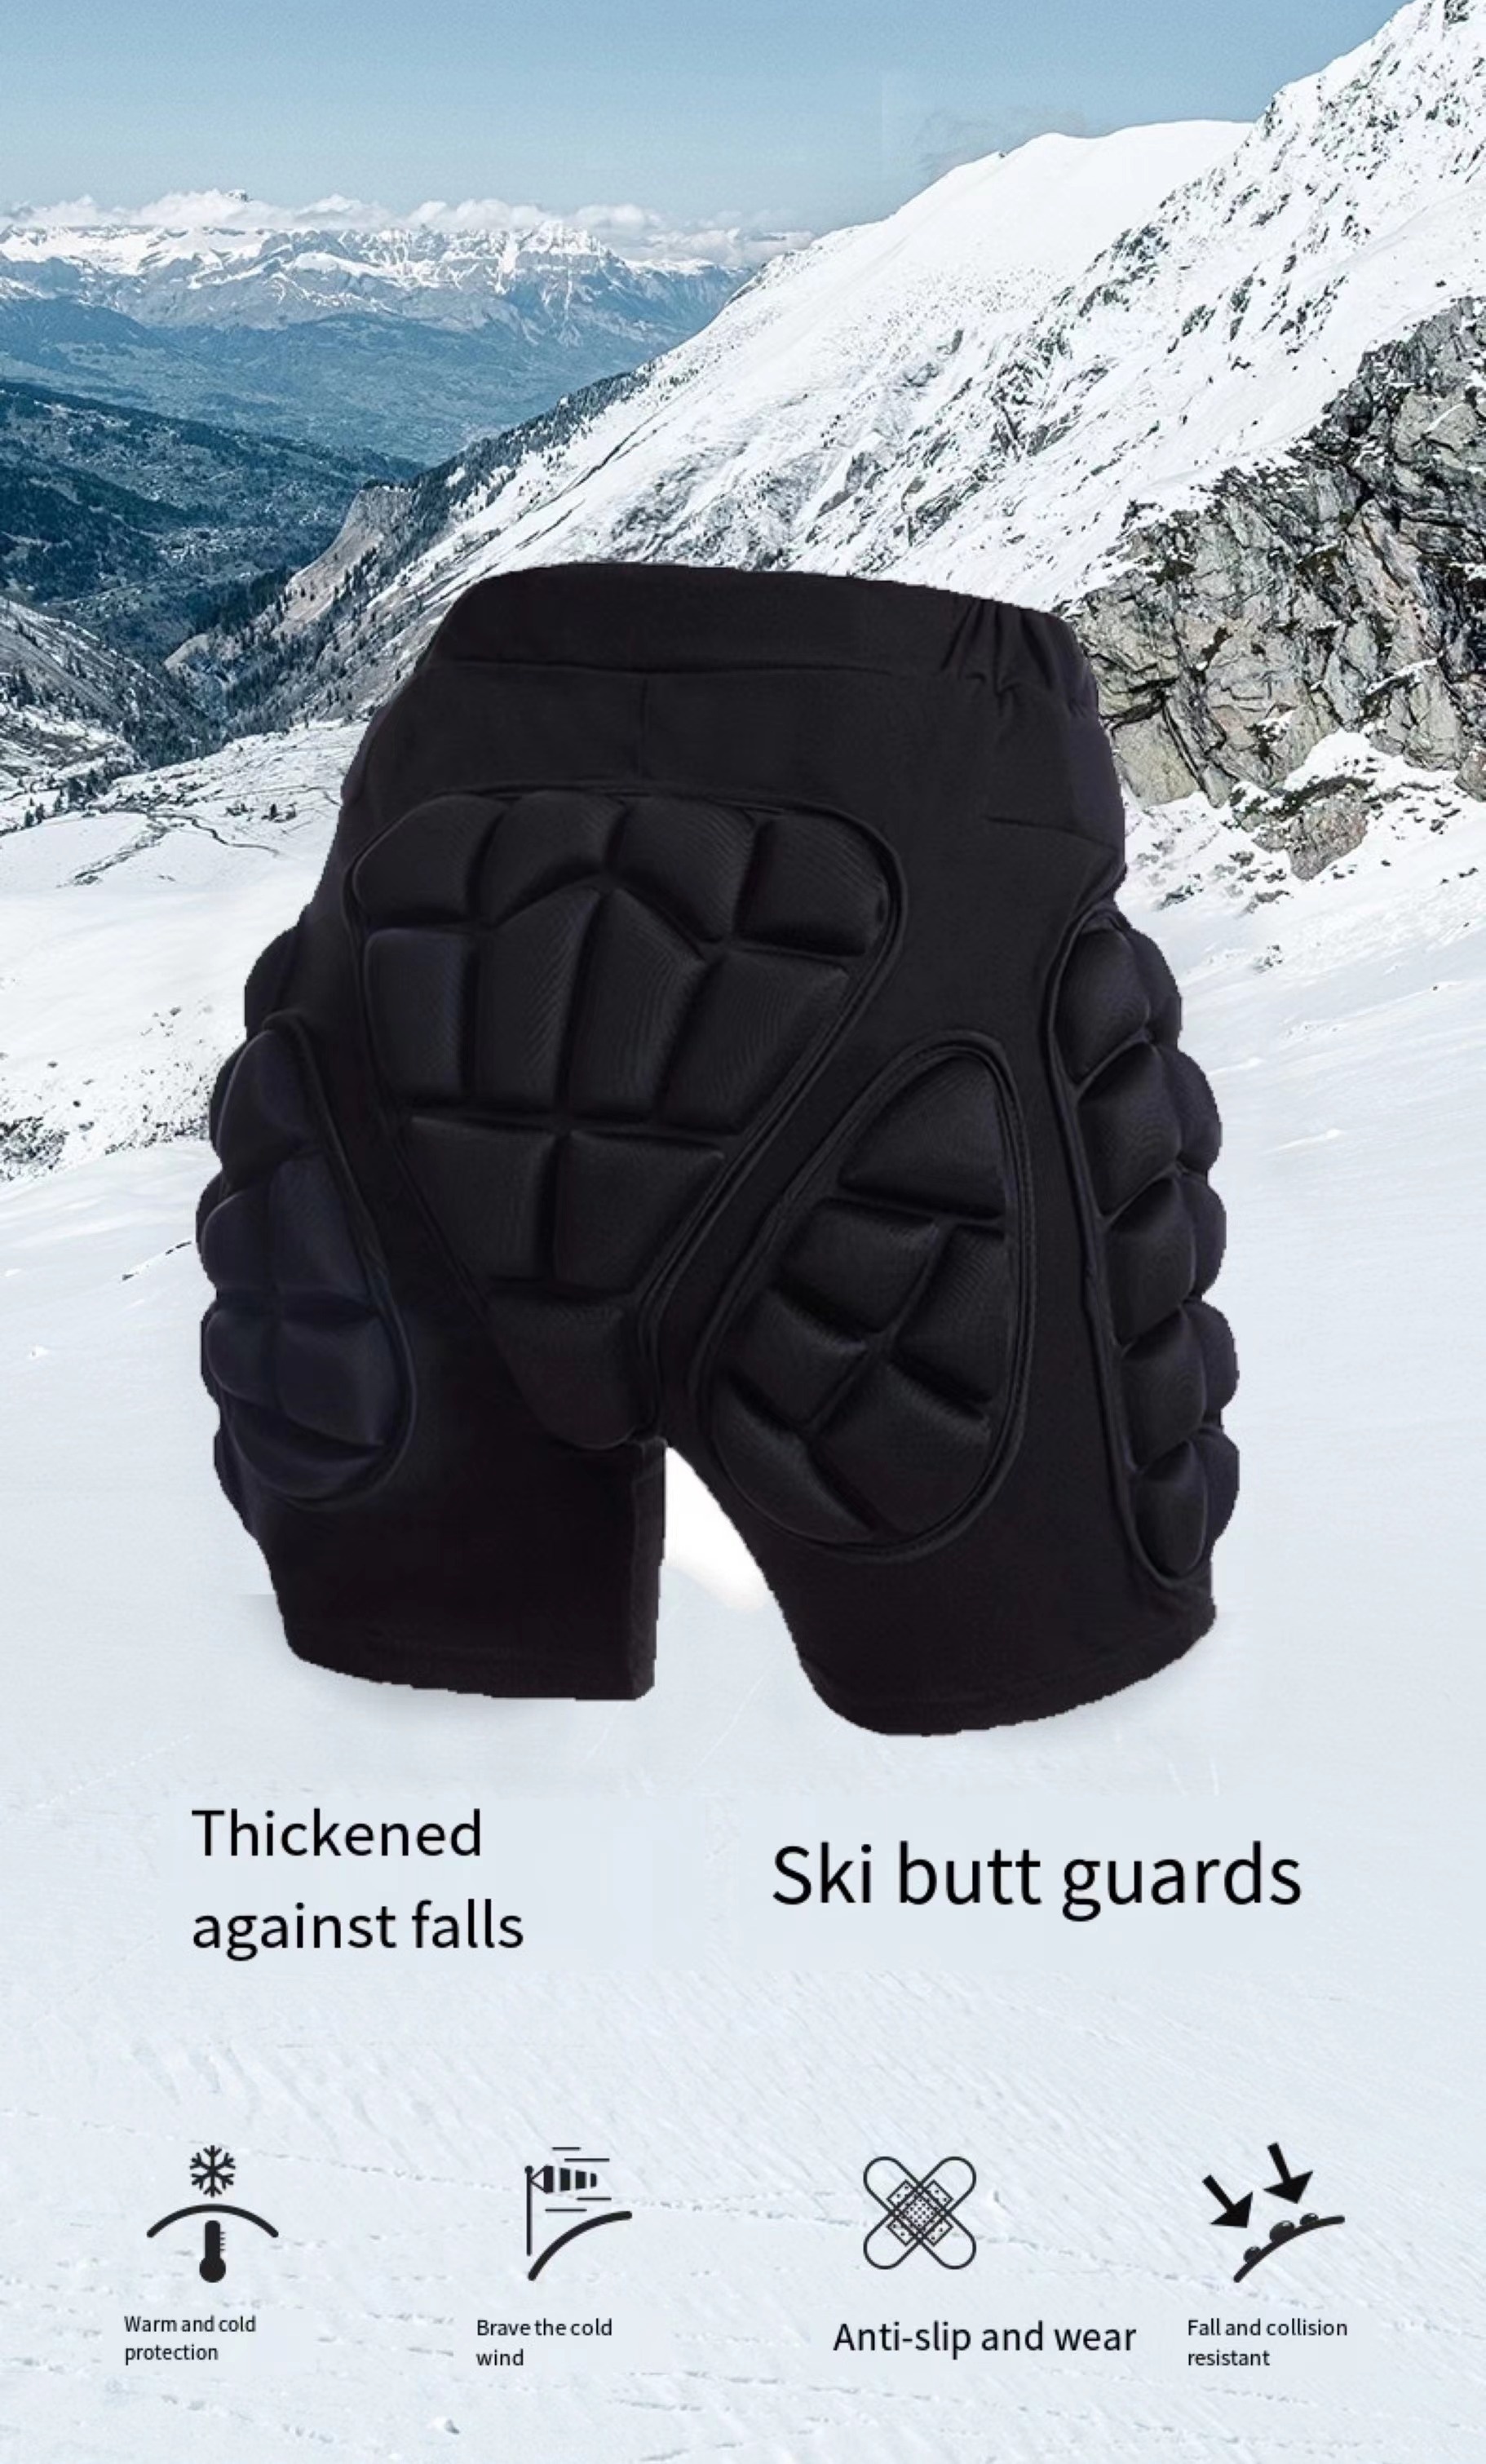 Men Protective Shorts Snowboard Ski Skate Hip Padded Impact Protector Gear  Pants